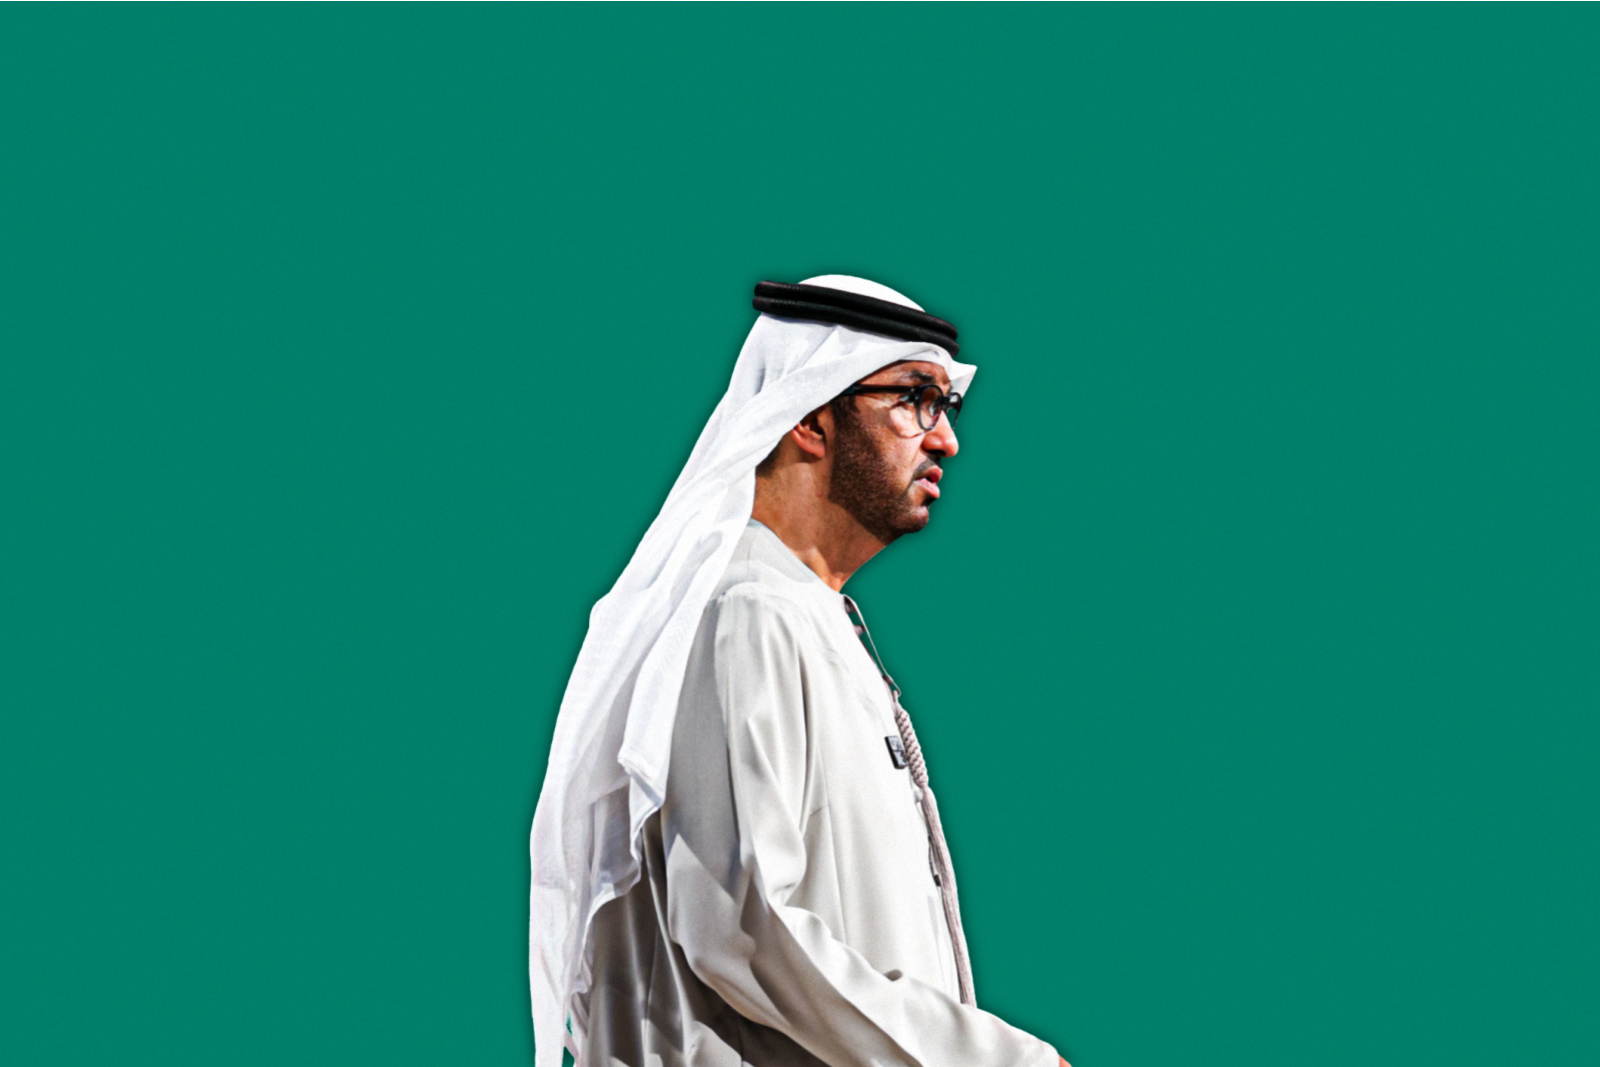 COP28 president Sultan al-Jaber